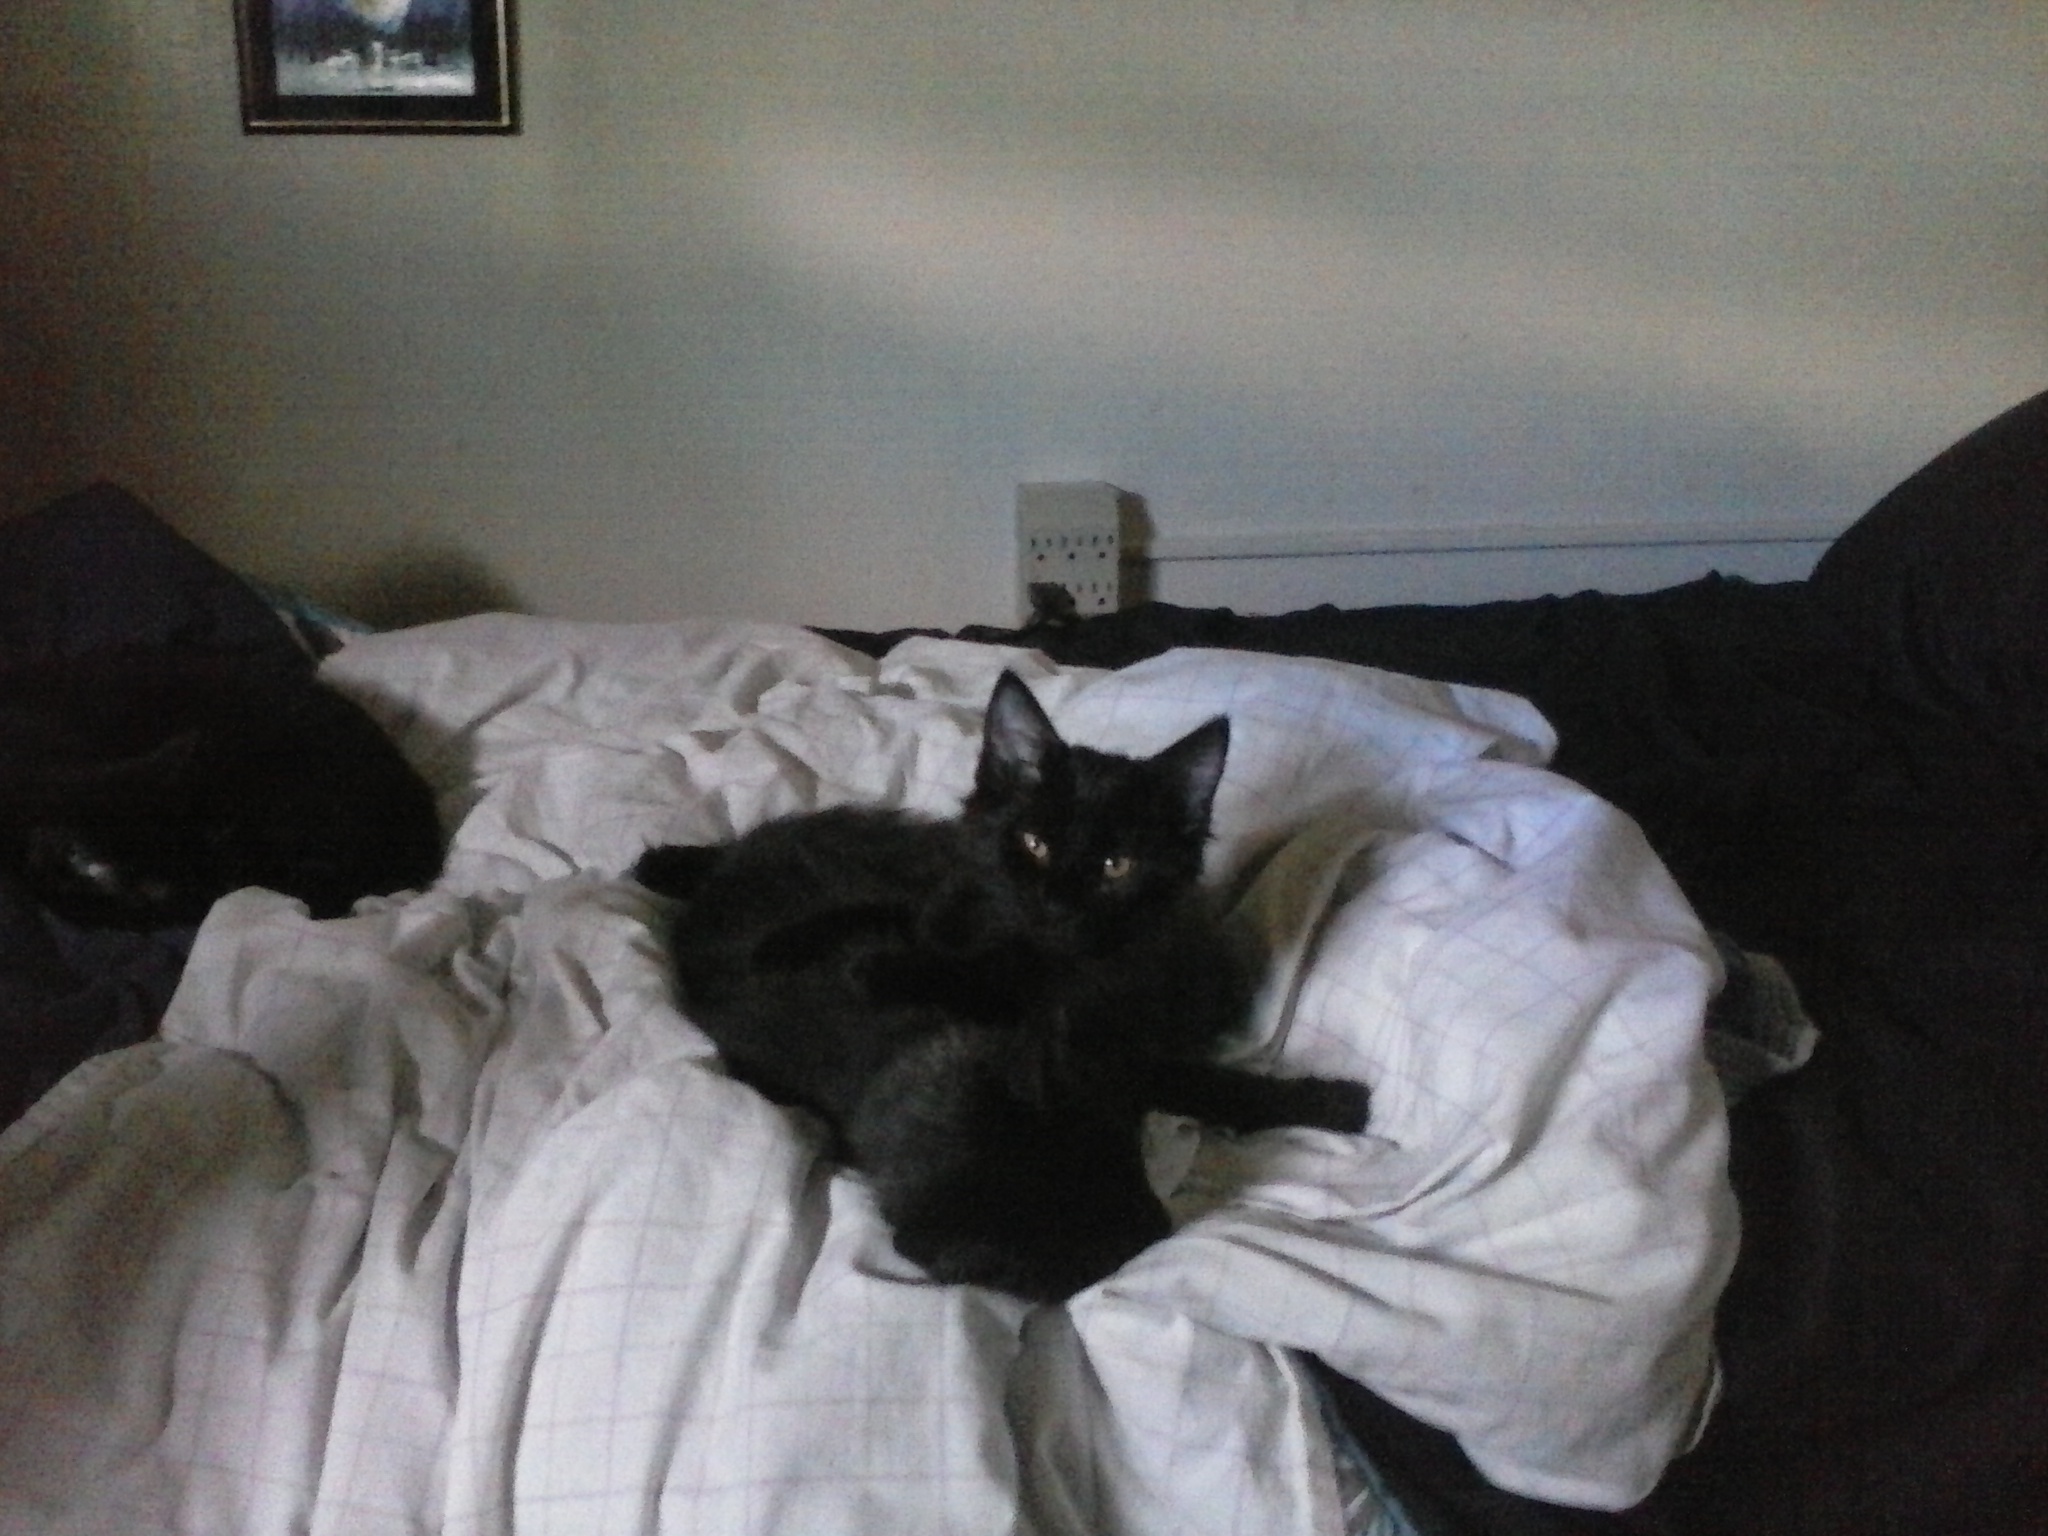 Kittens make bed-making challenging. 